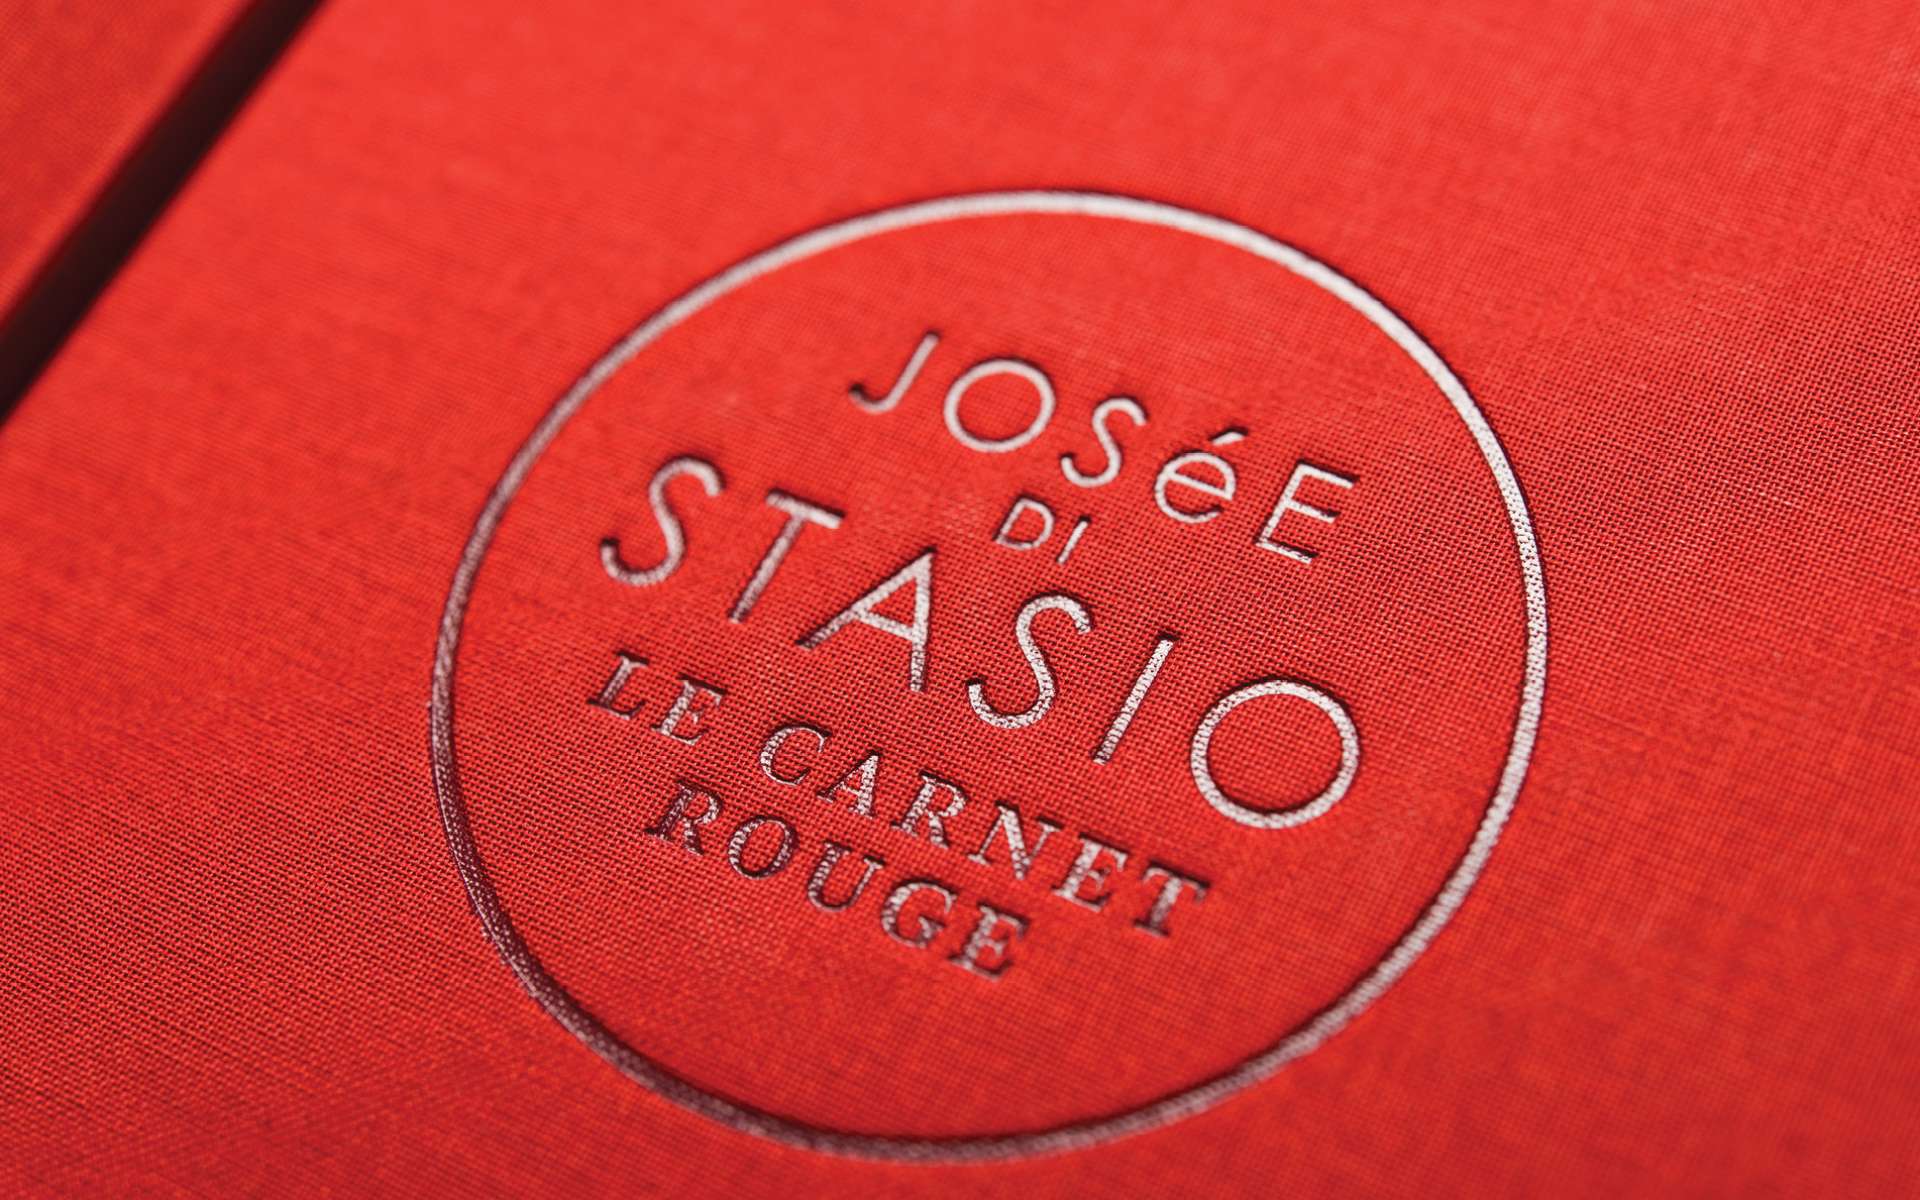 Josée di Stasio - Le carnet rouge